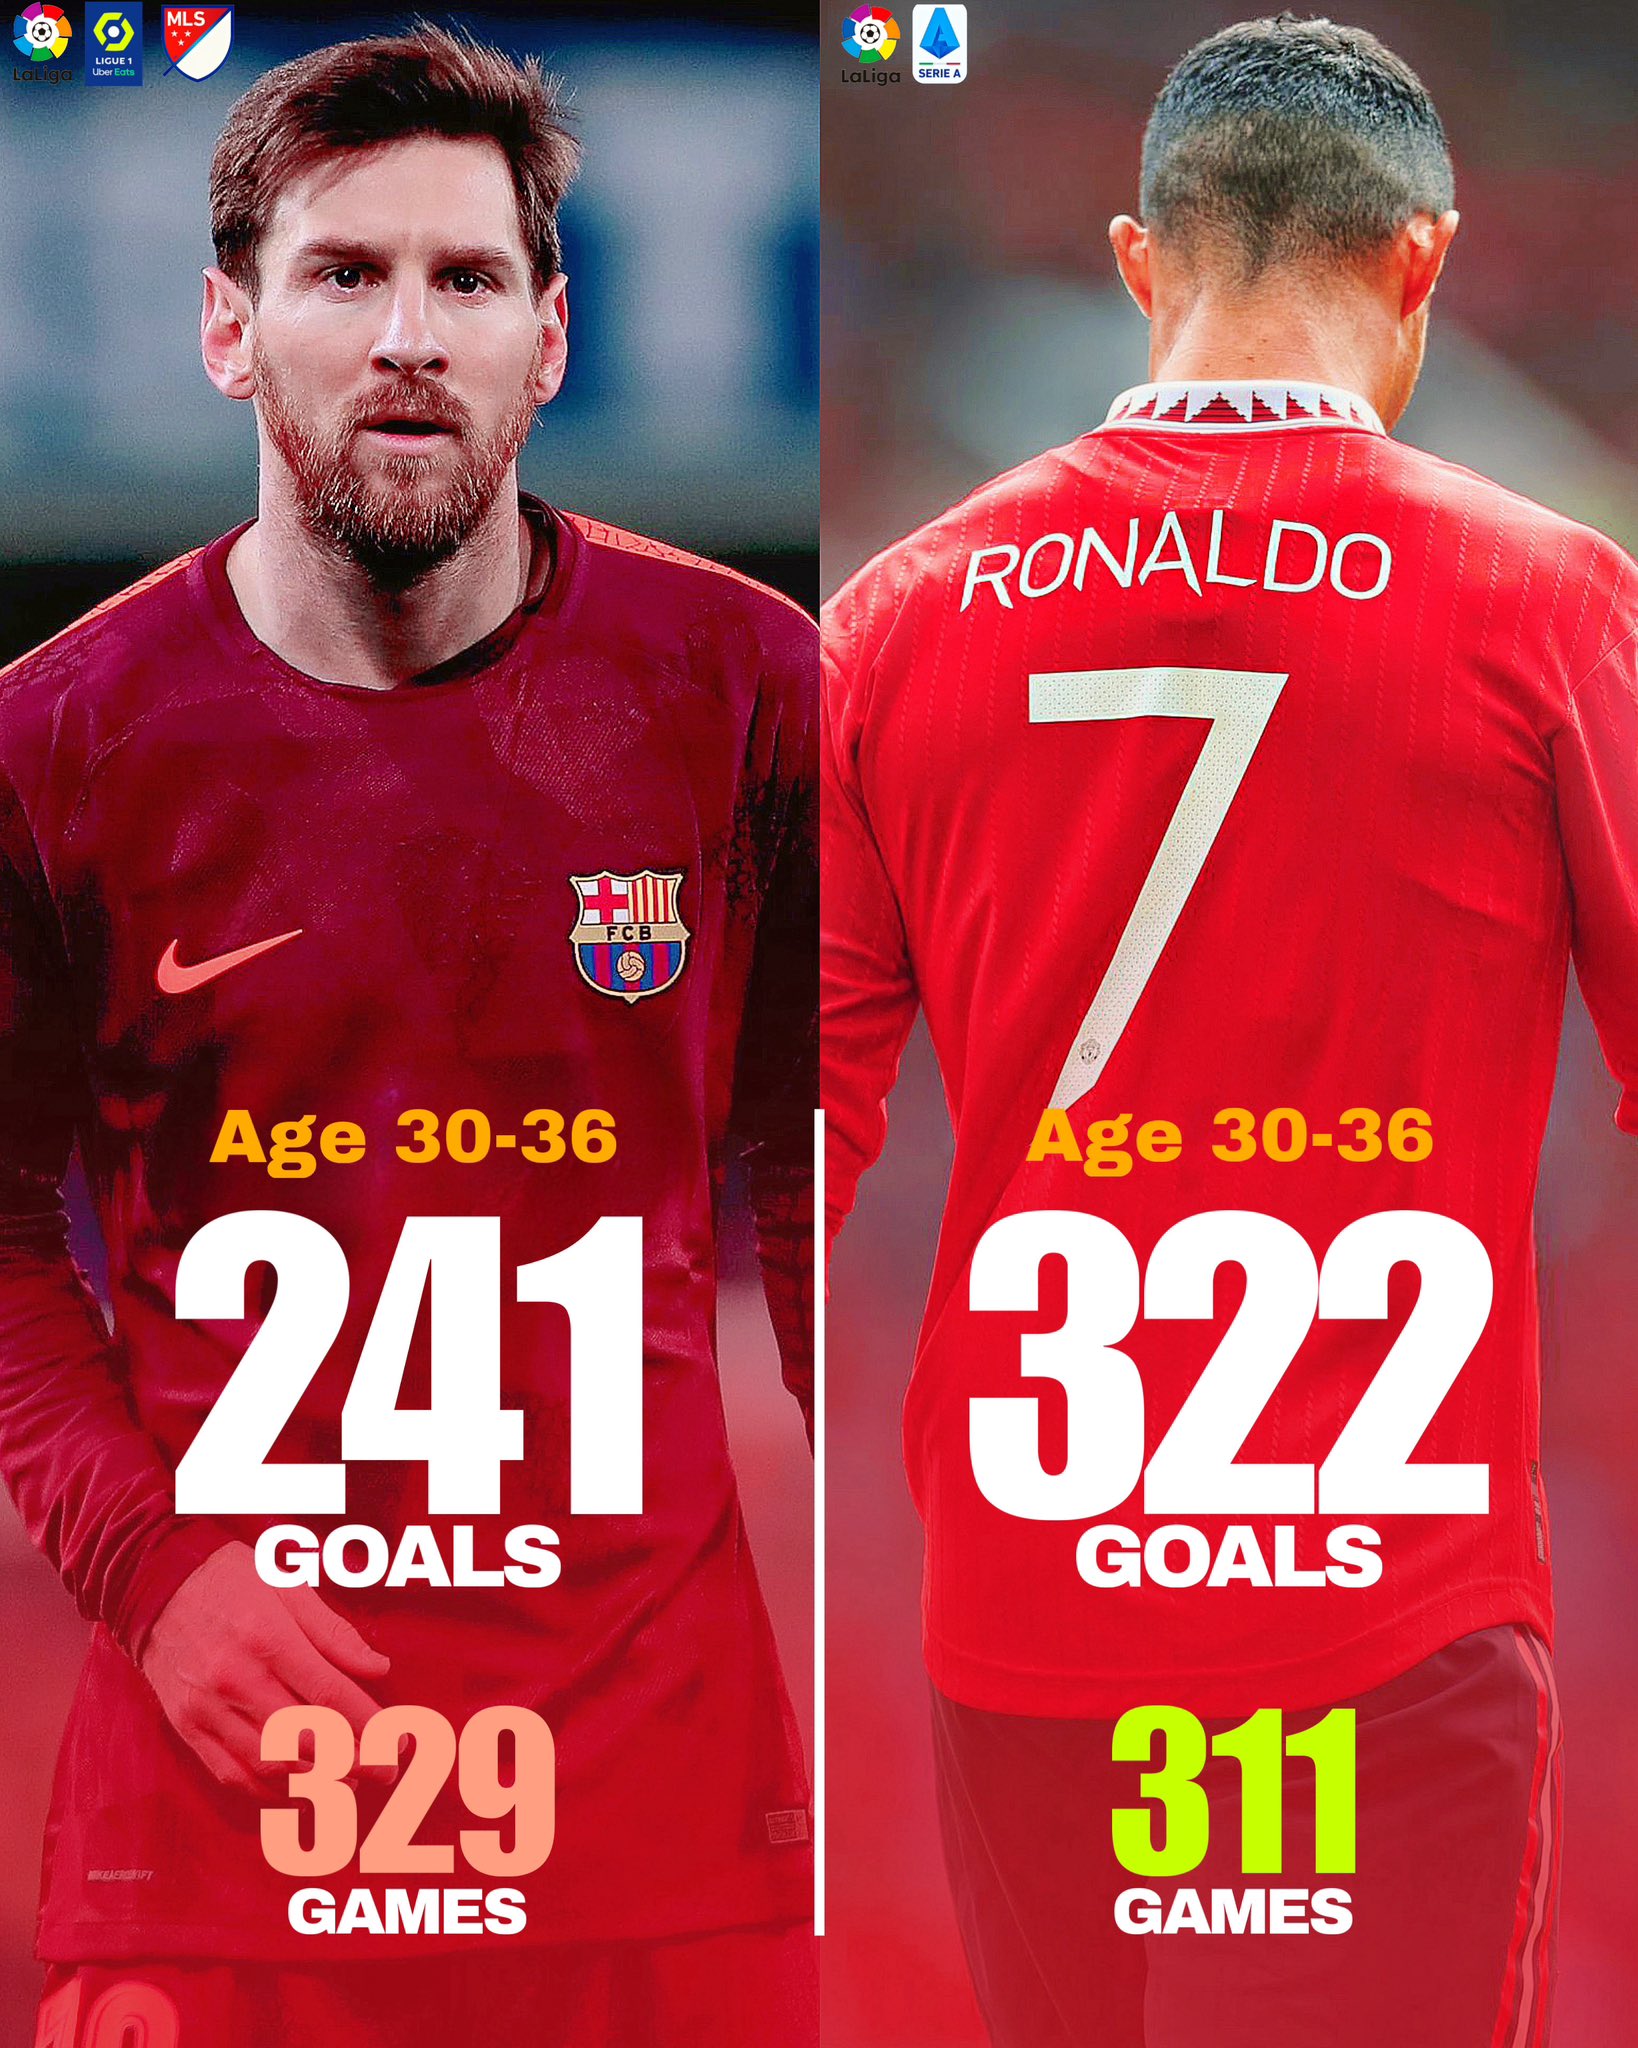 Ultimategoat867 on X: Messi Vs Ronaldo age 30-36! 🧬⚽️✓ https